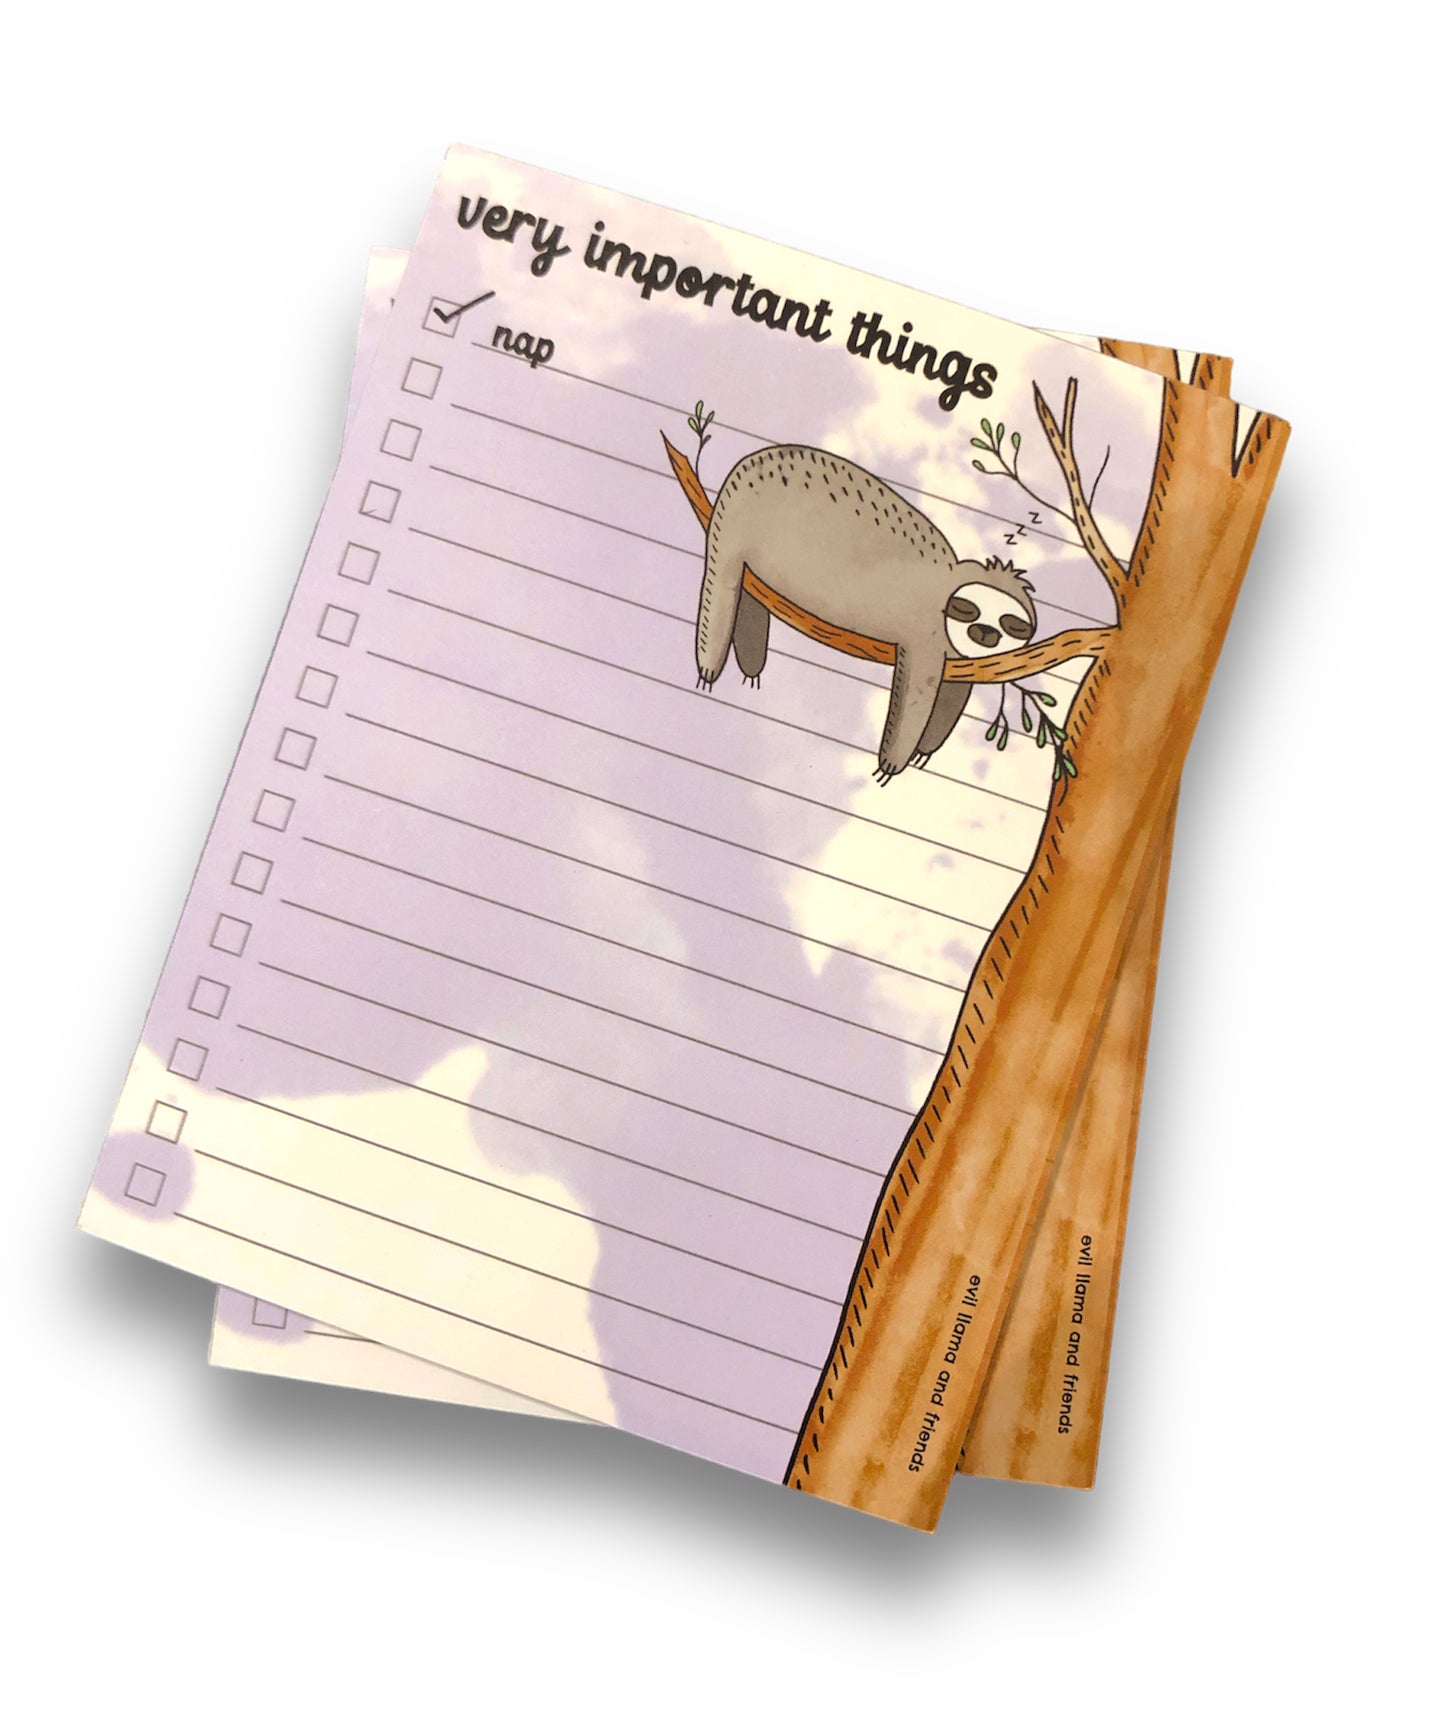 very important things (sleepy sloth) notepad